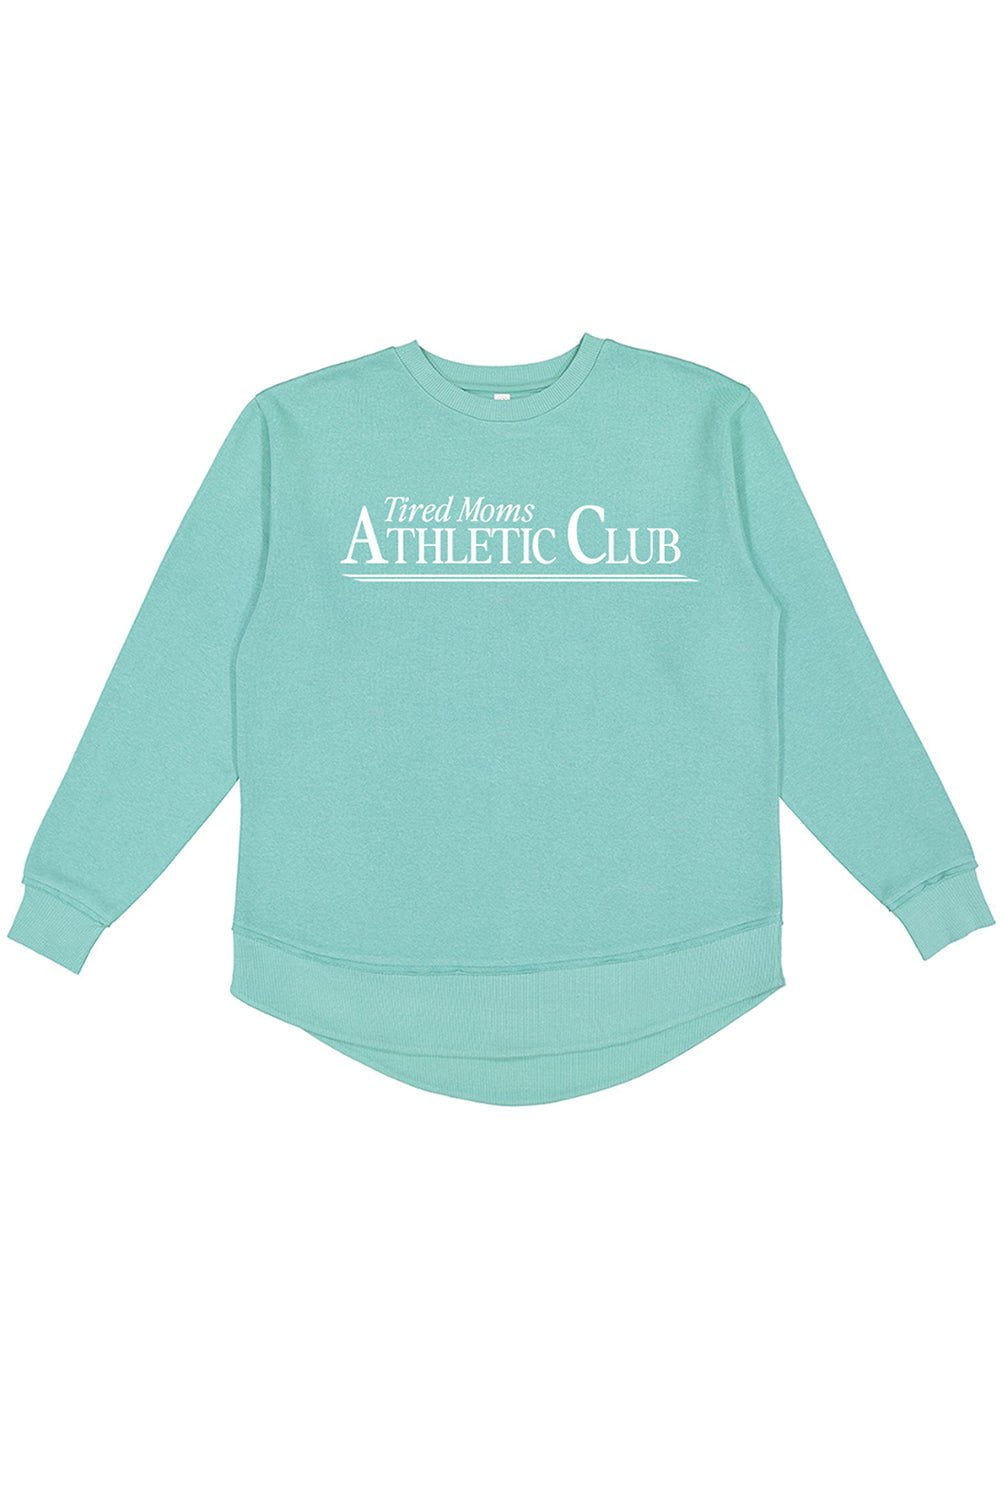 Sarah Marie Design Studio Sweatshirt Small / Teal Tired Moms Athletic Club Sweatshirt